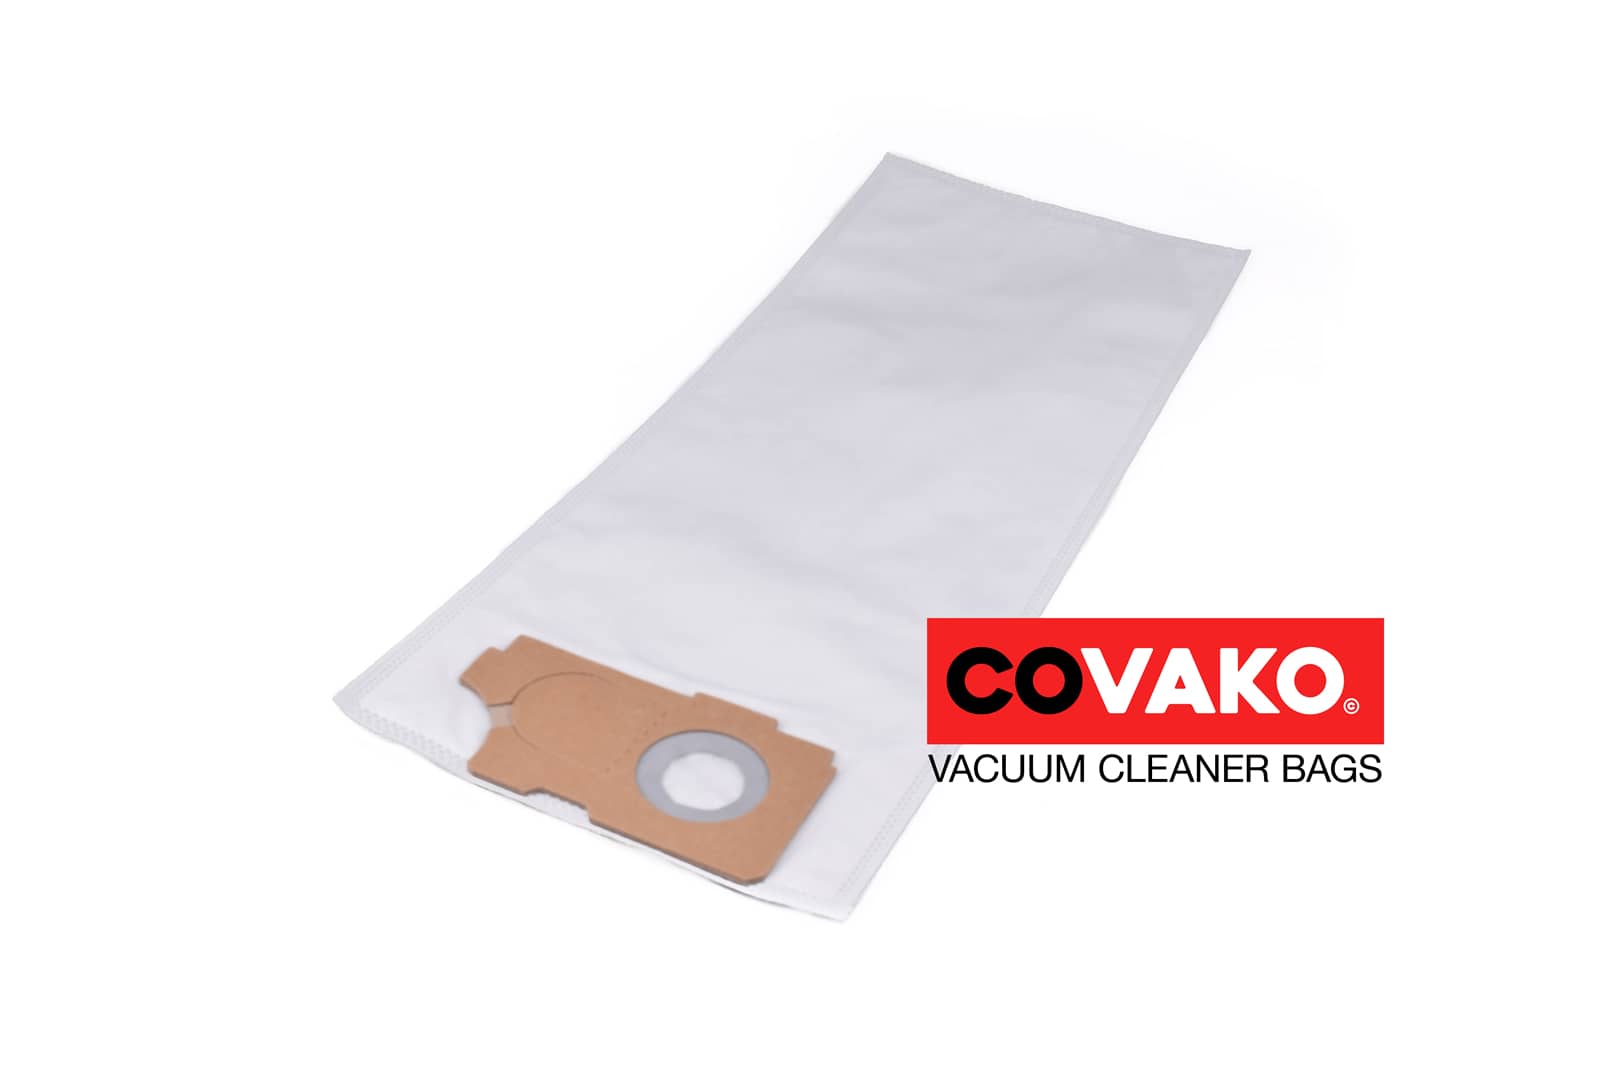 Clean a la Card Comfort 36 / Synthesis - Clean a la Card vacuum cleaner bags